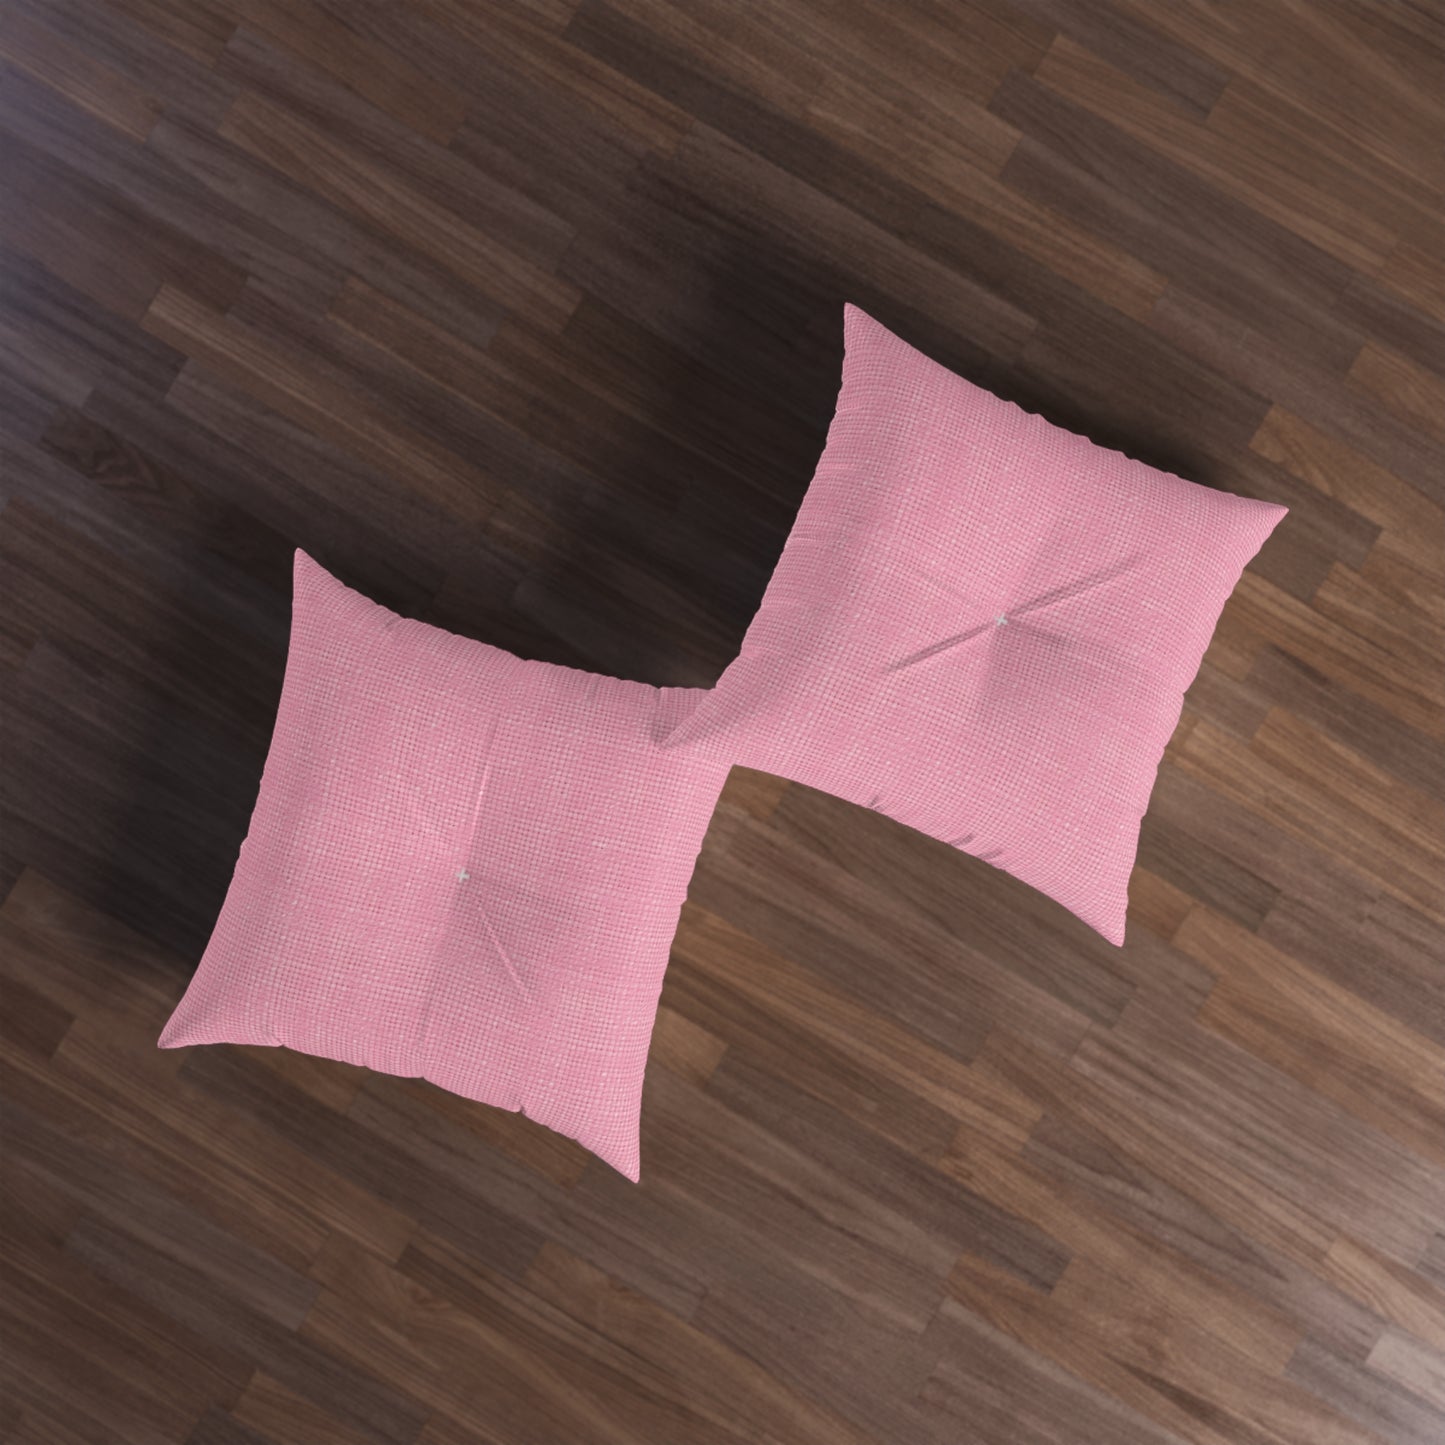 Pastel Rose Pink: Denim-Inspired, Refreshing Fabric Design - Tufted Floor Pillow, Square